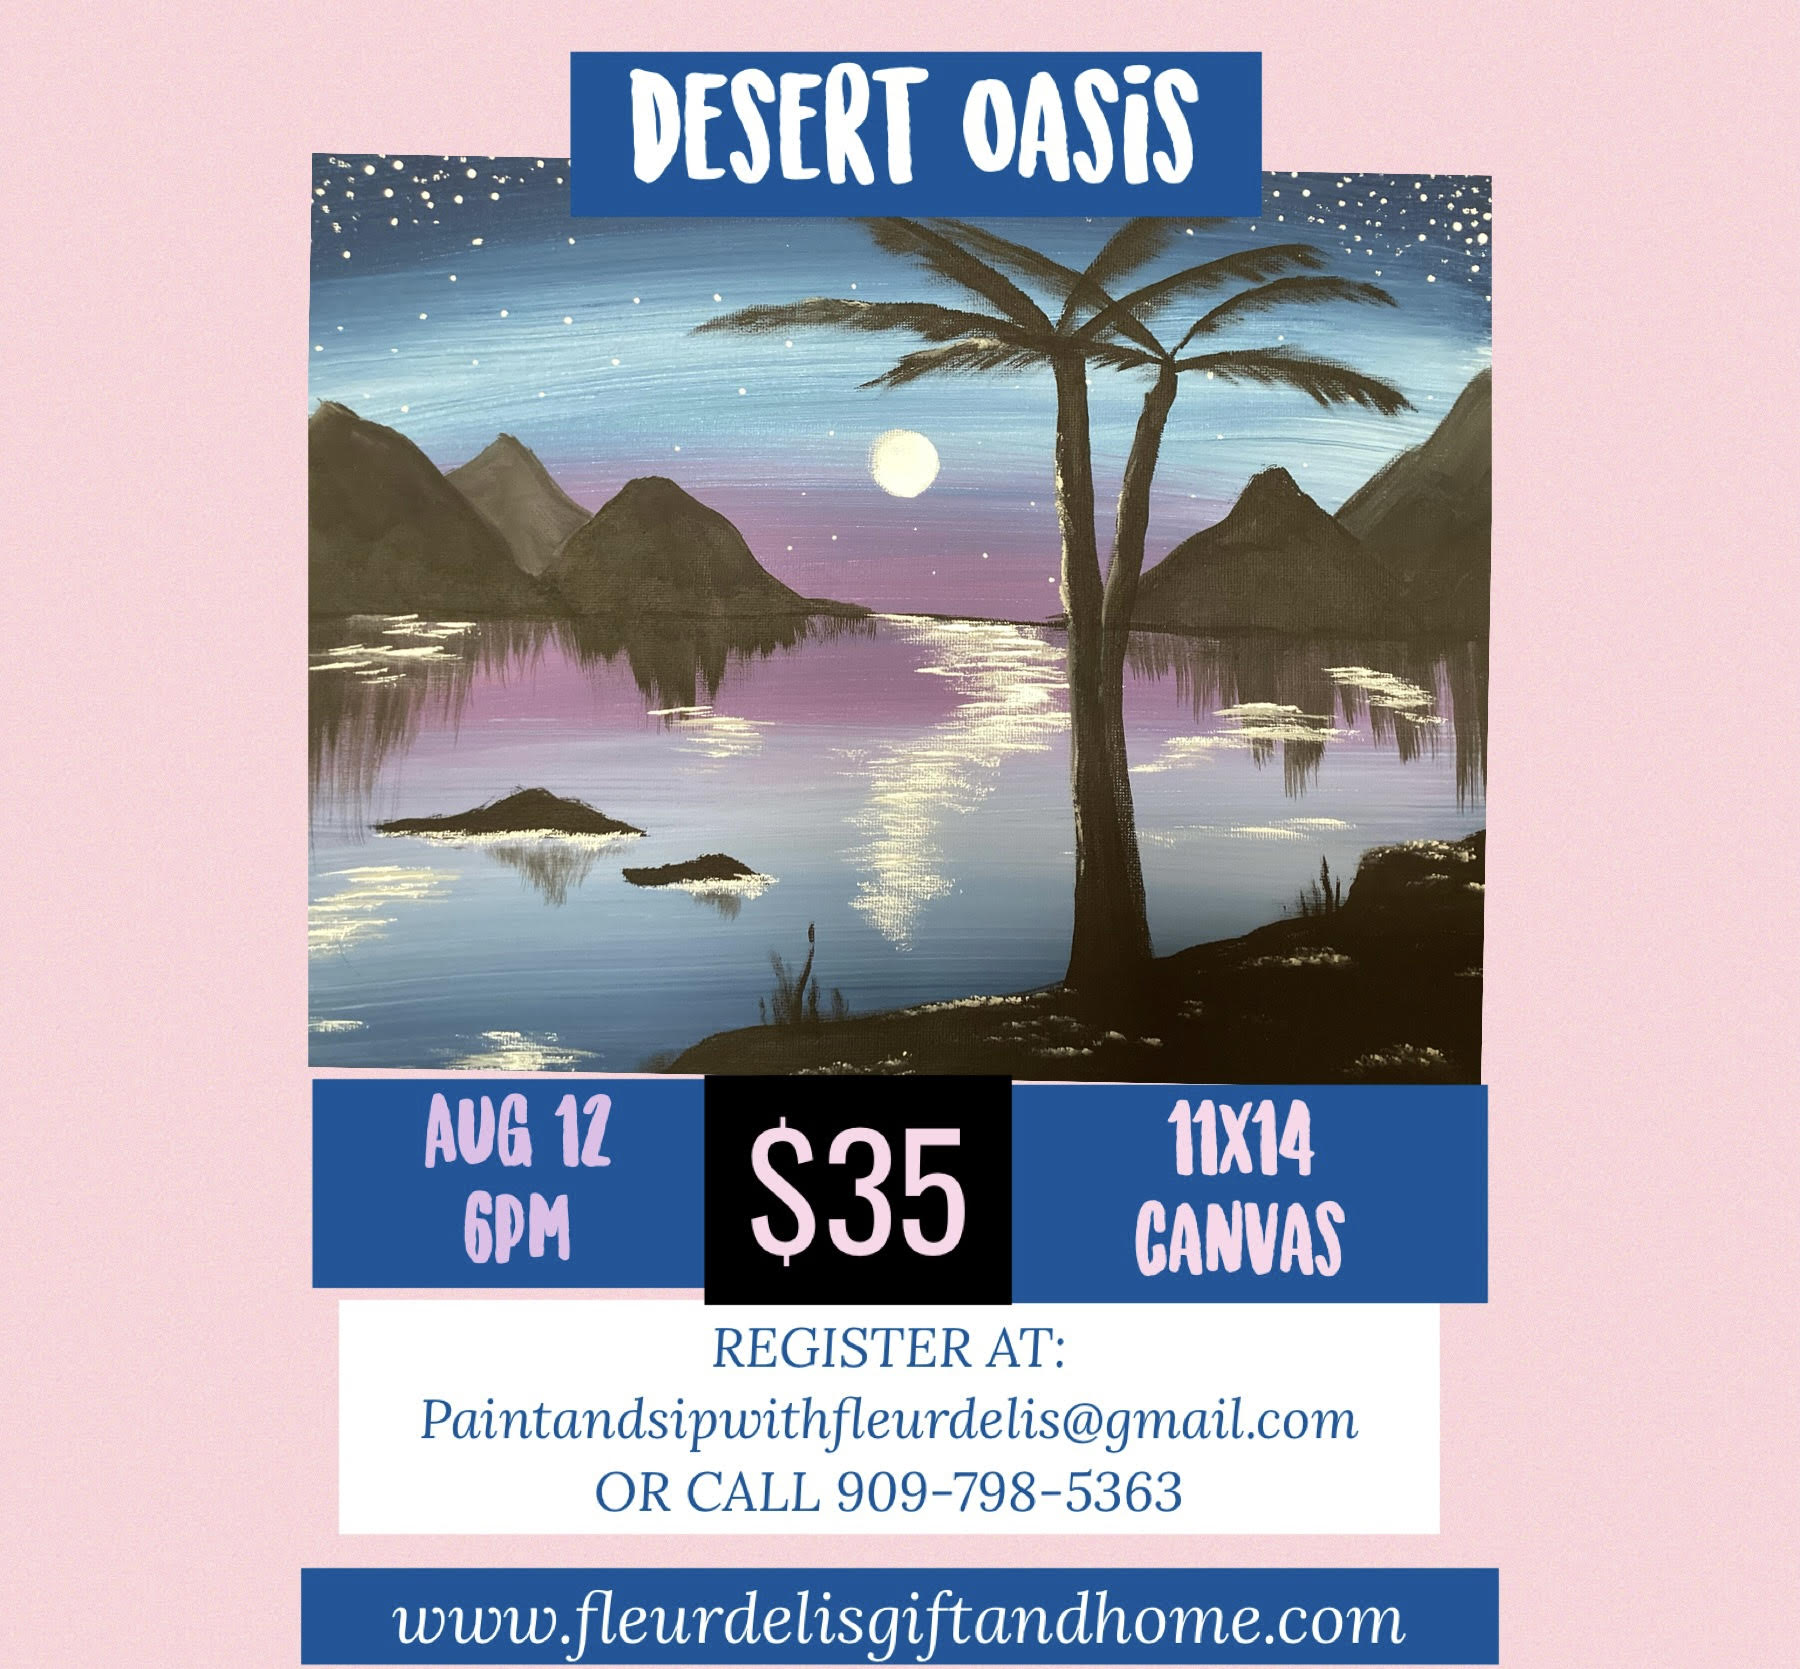 Desert Oasis August 12th 6 p.m.